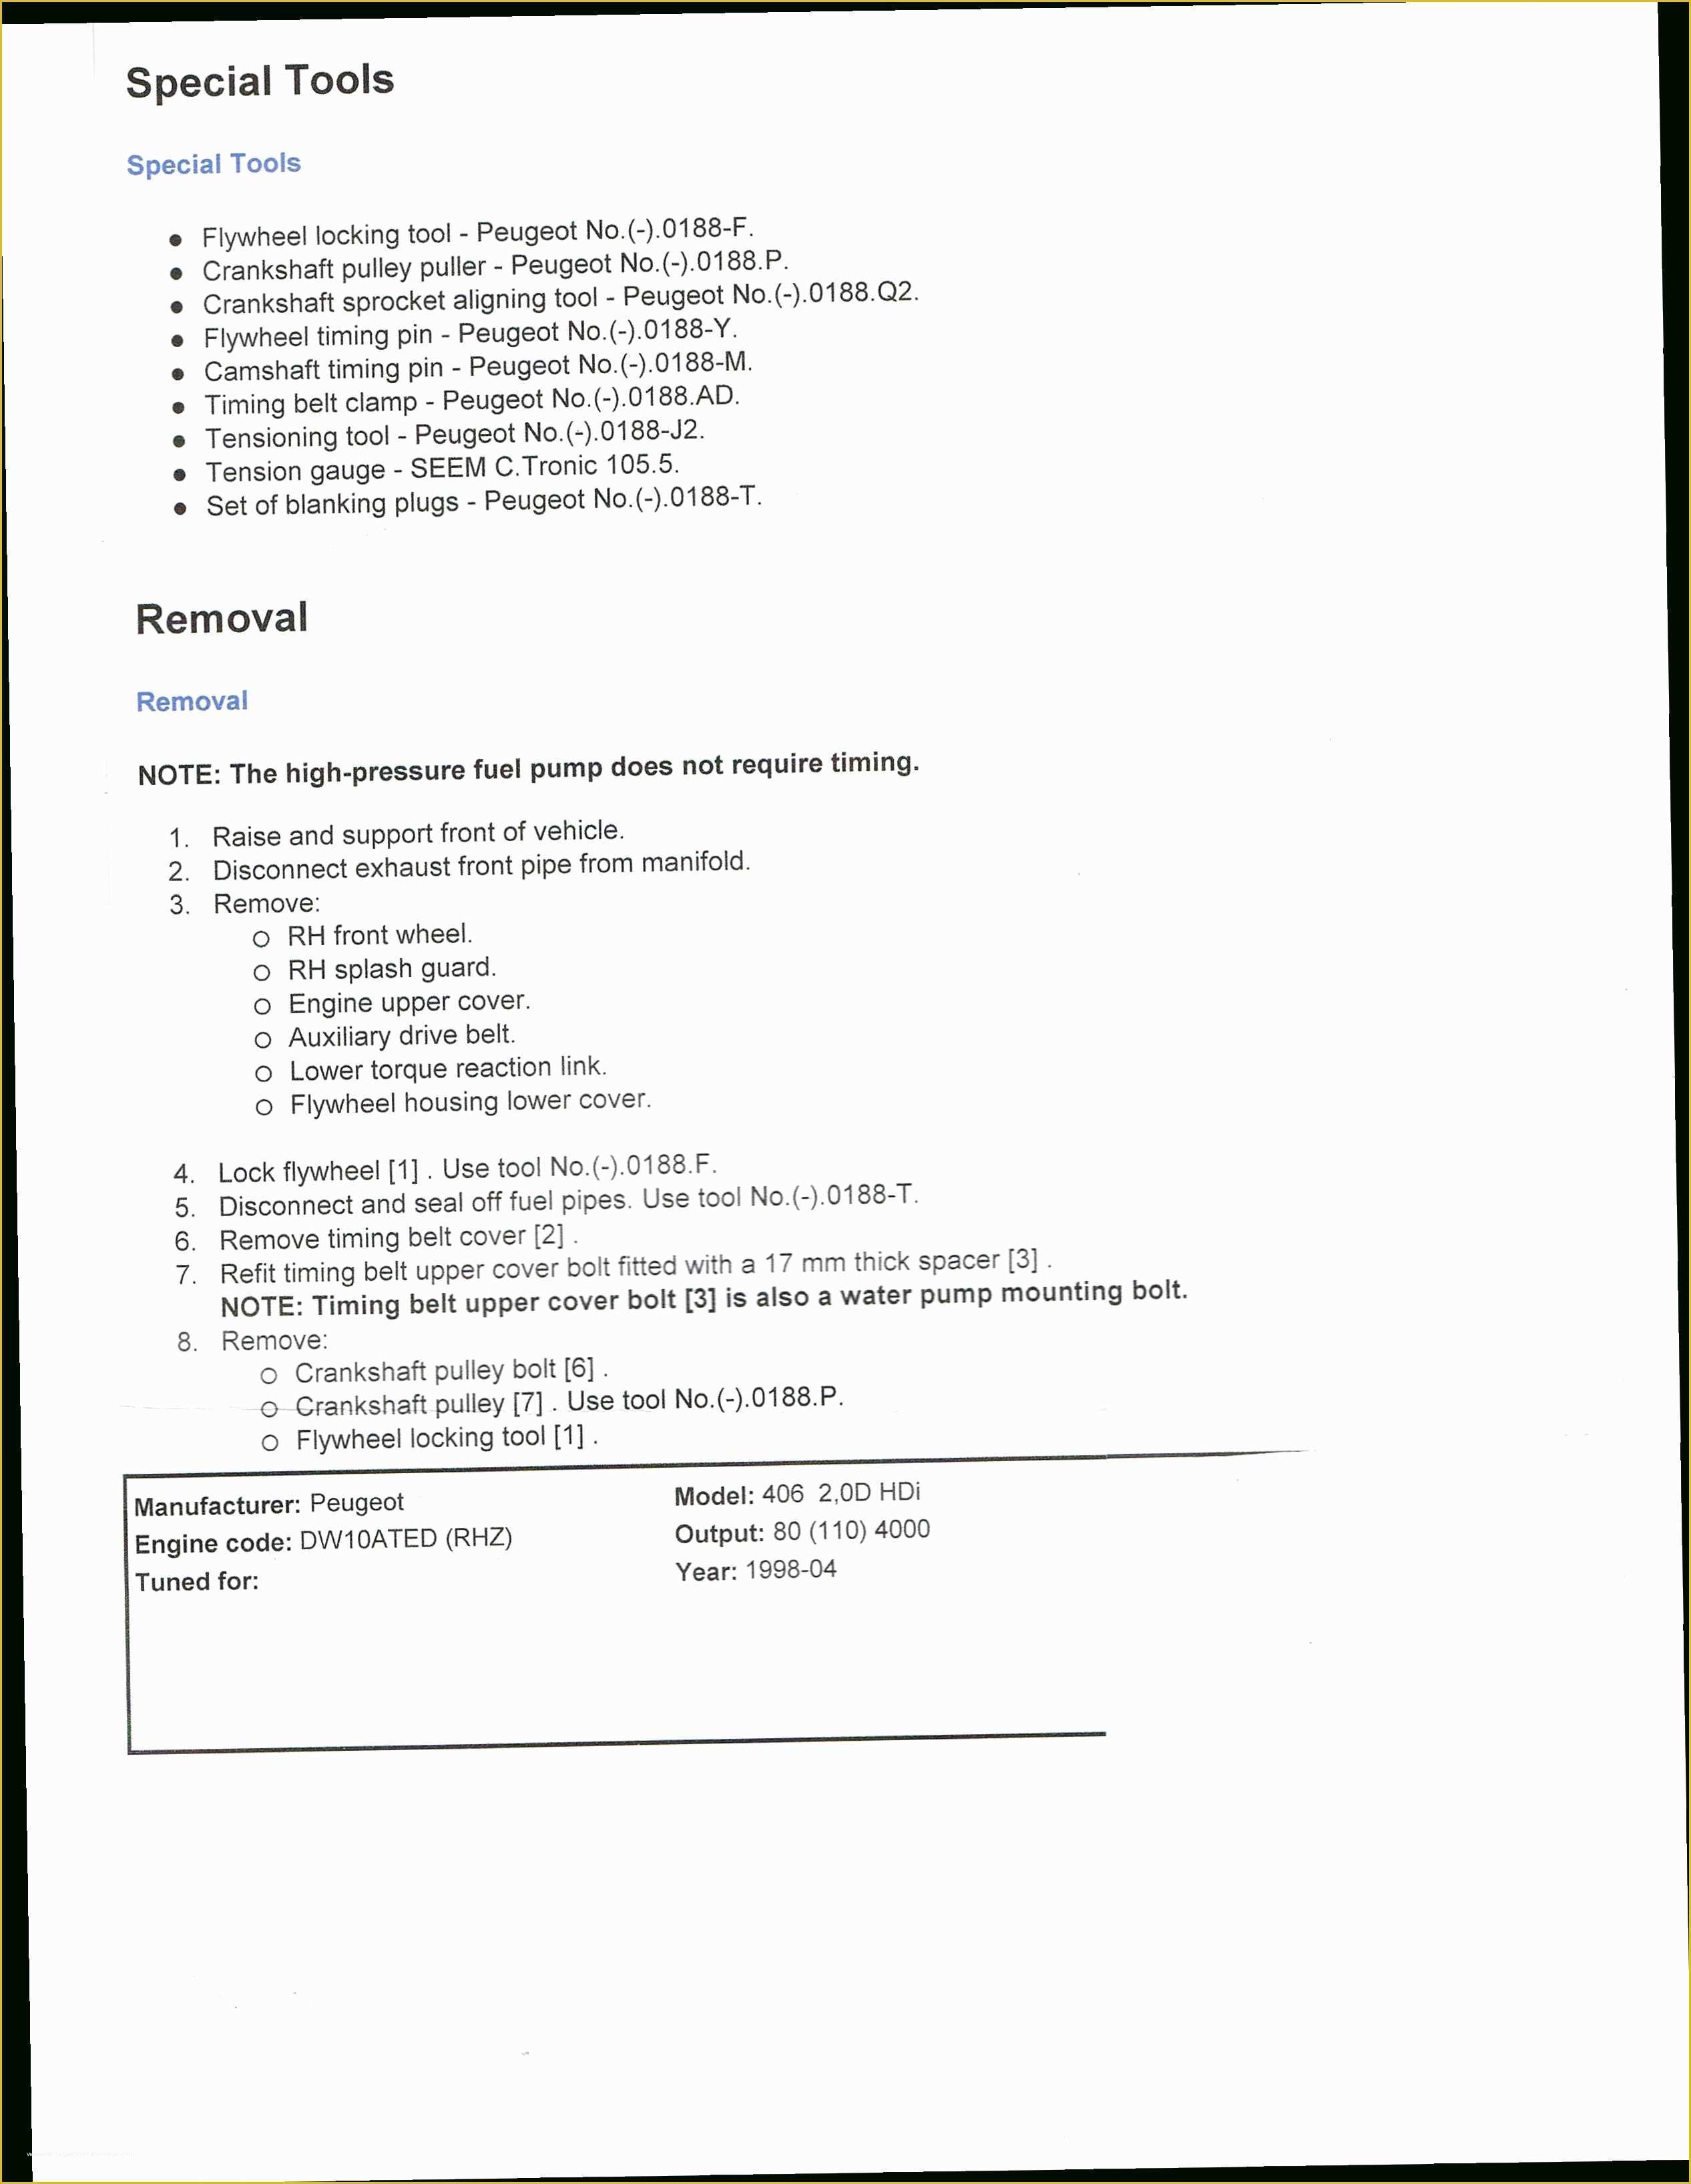 Free Resume Templates Microsoft Word 2007 Of Microsoft Word Resume Templates 2007 Best Free